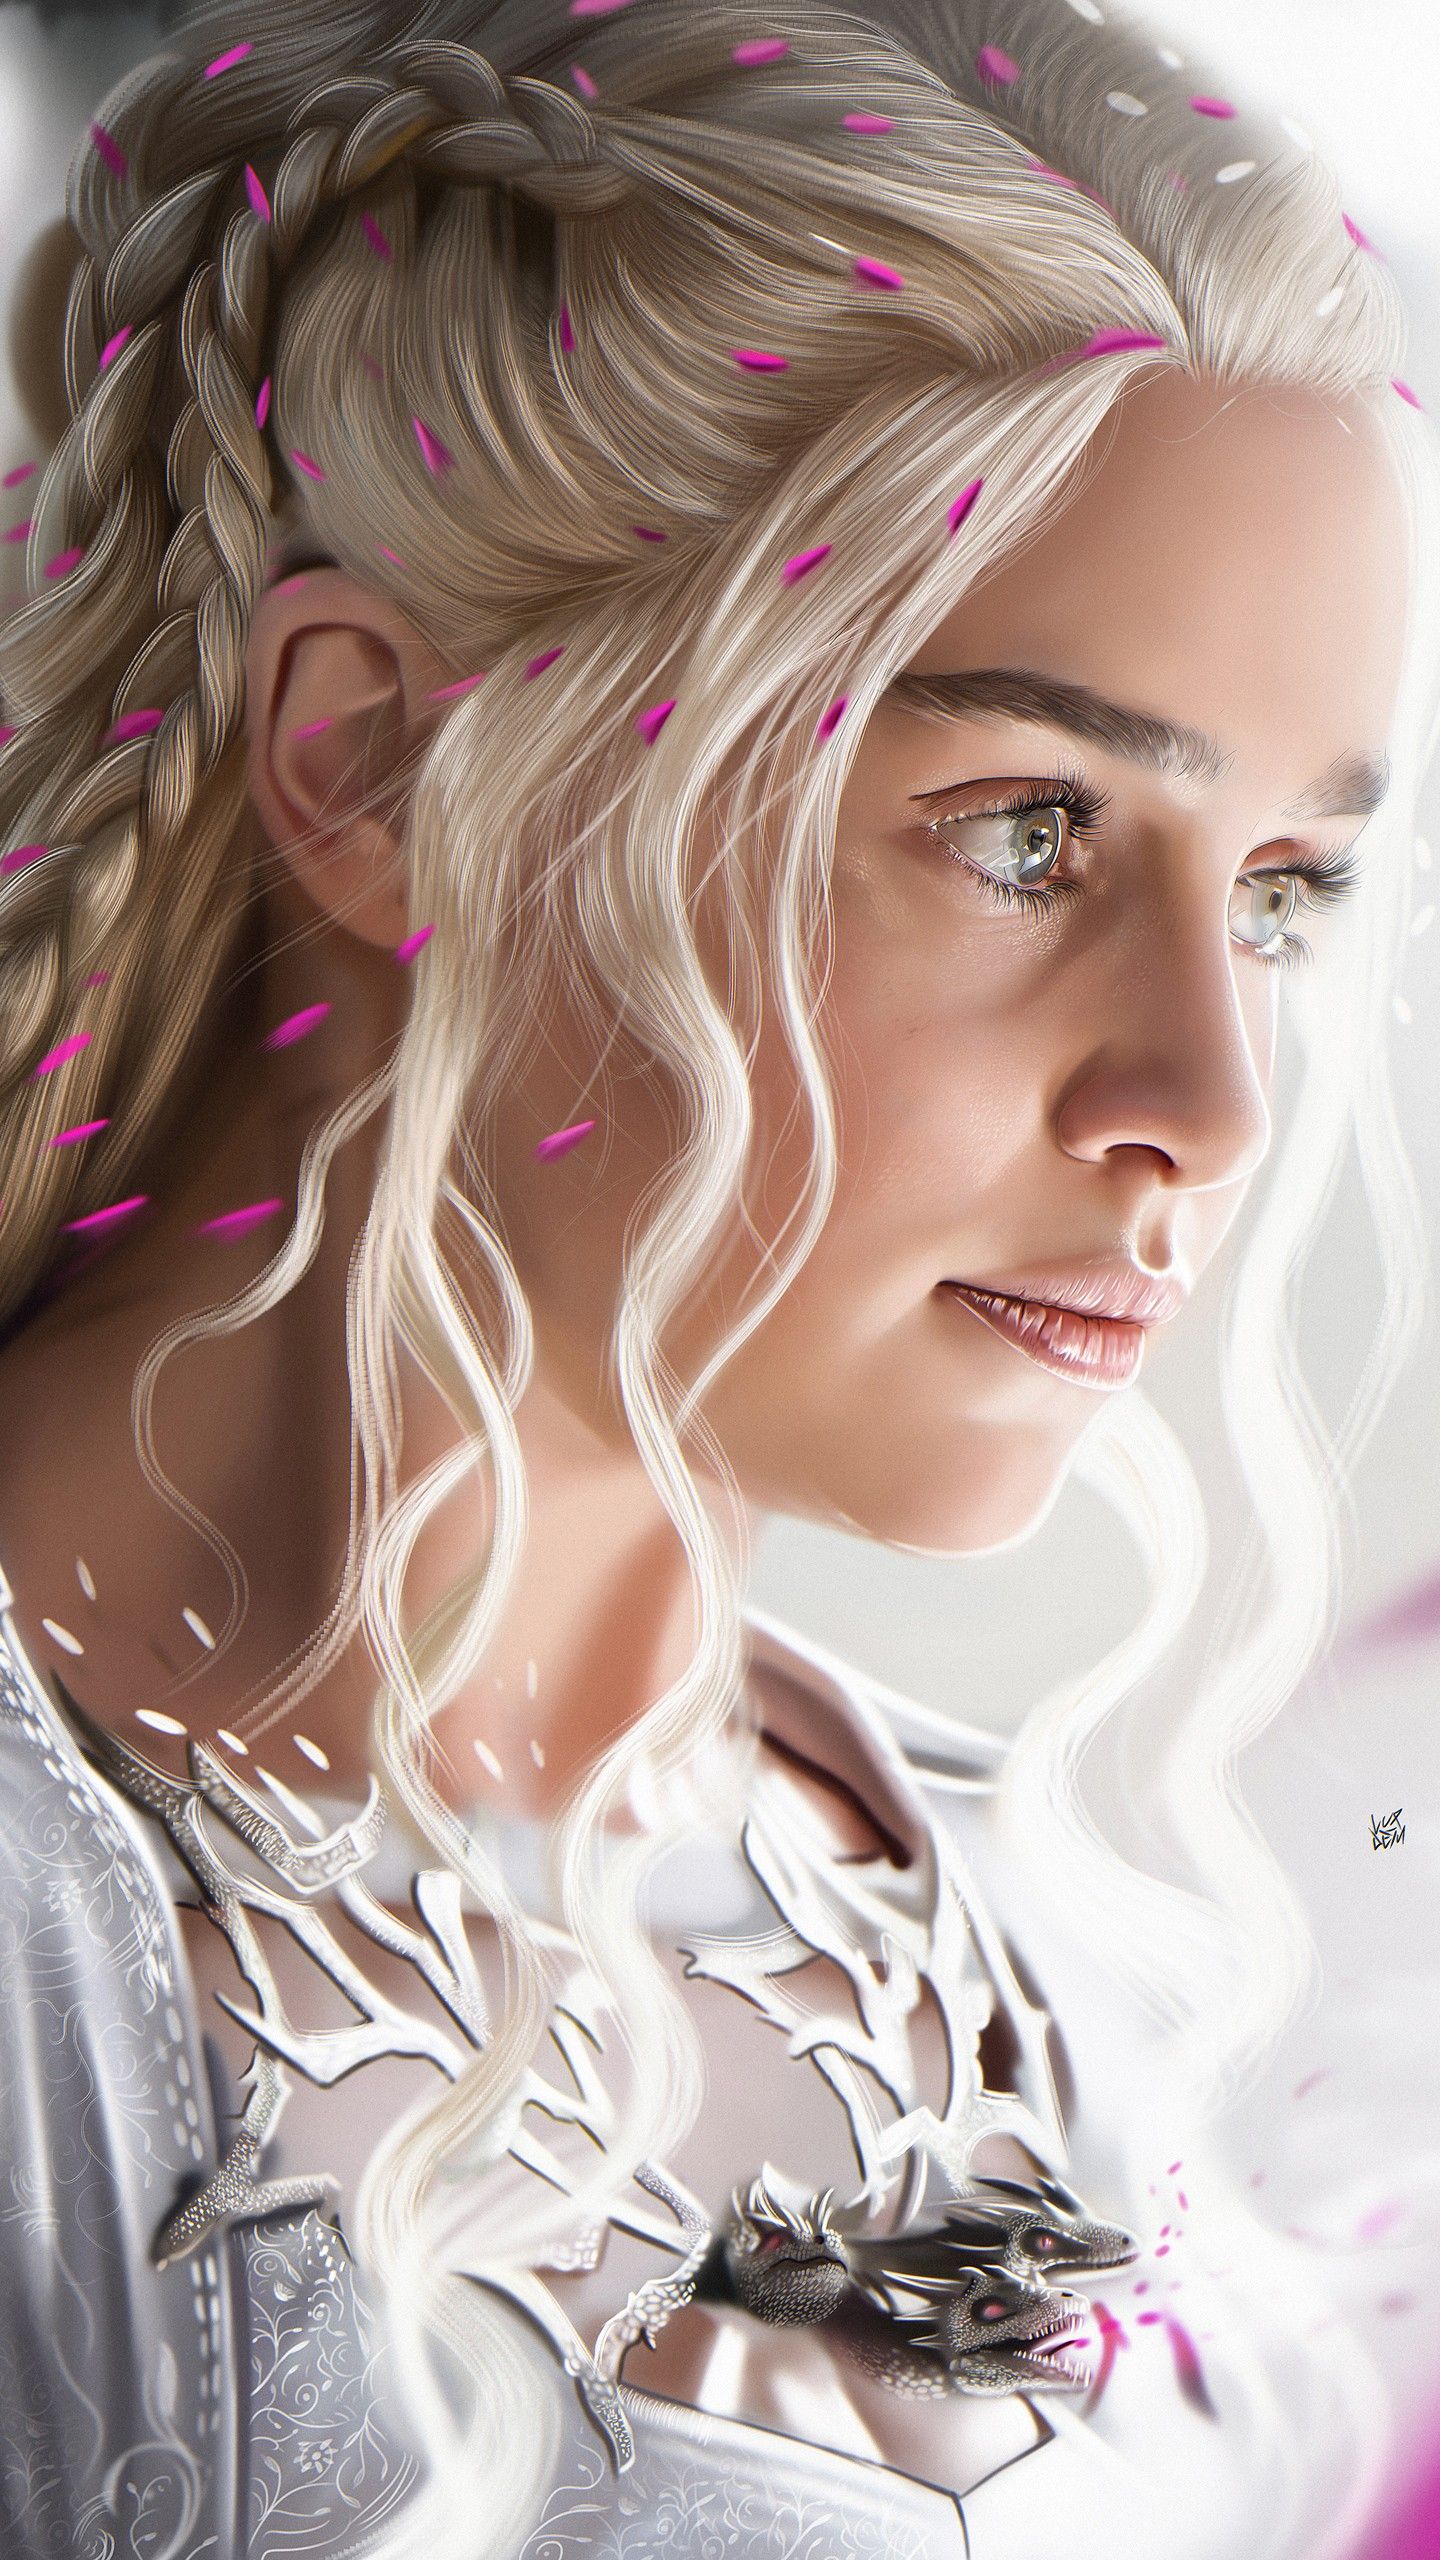 Daenerys Targaryen In Game Of Thrones iPhone Wallpapers Free Download